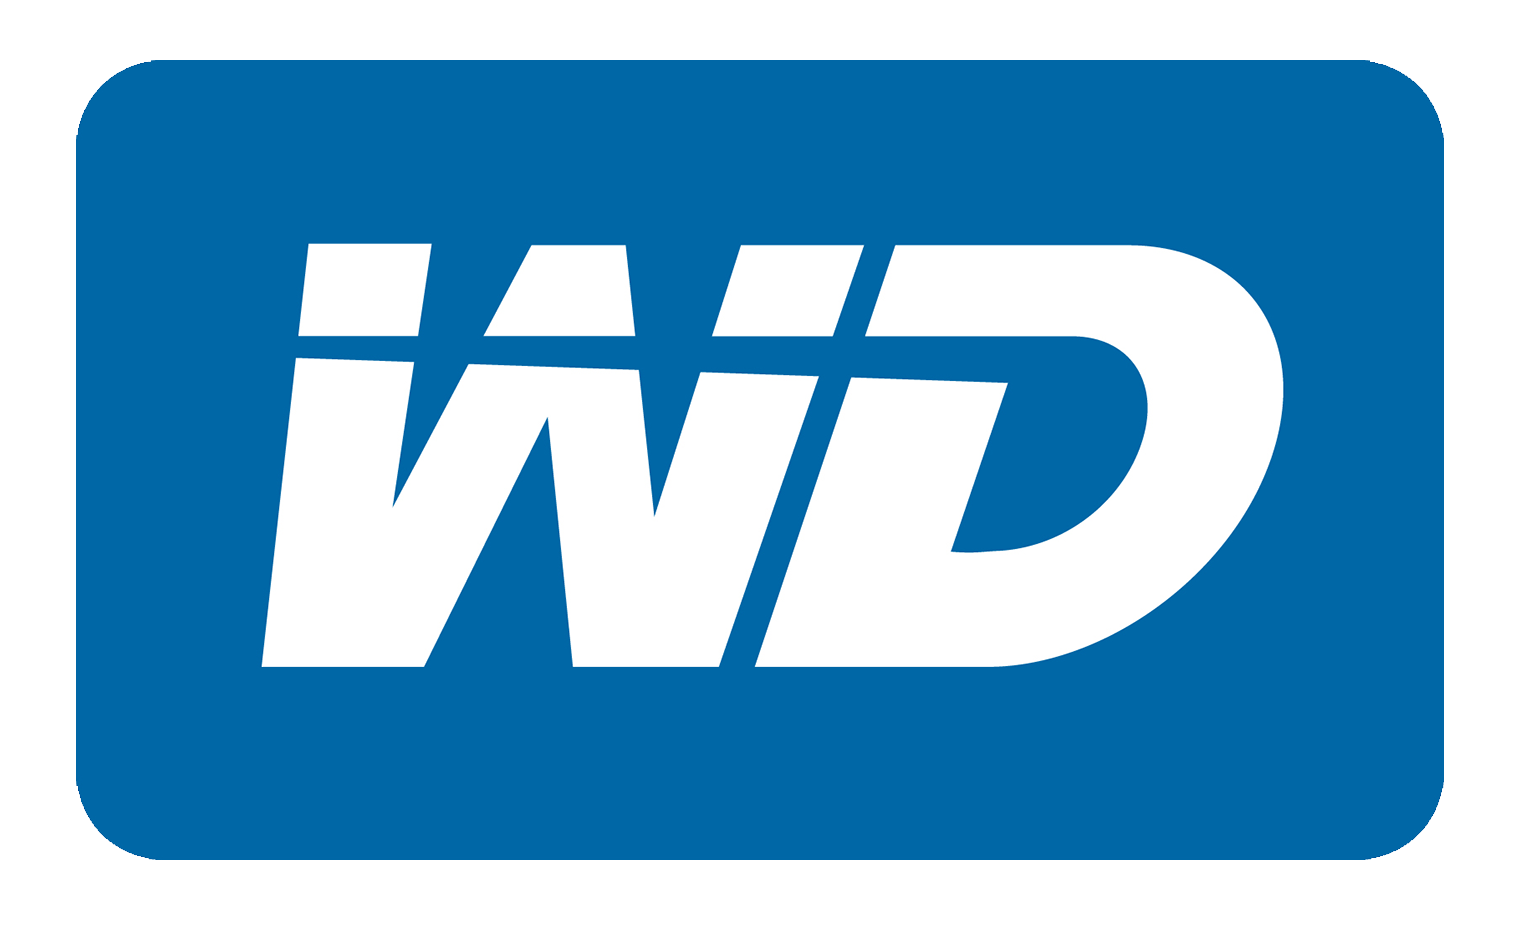 Download Western Digital Logo Png Image For Free - Western Digital, Transparent background PNG HD thumbnail